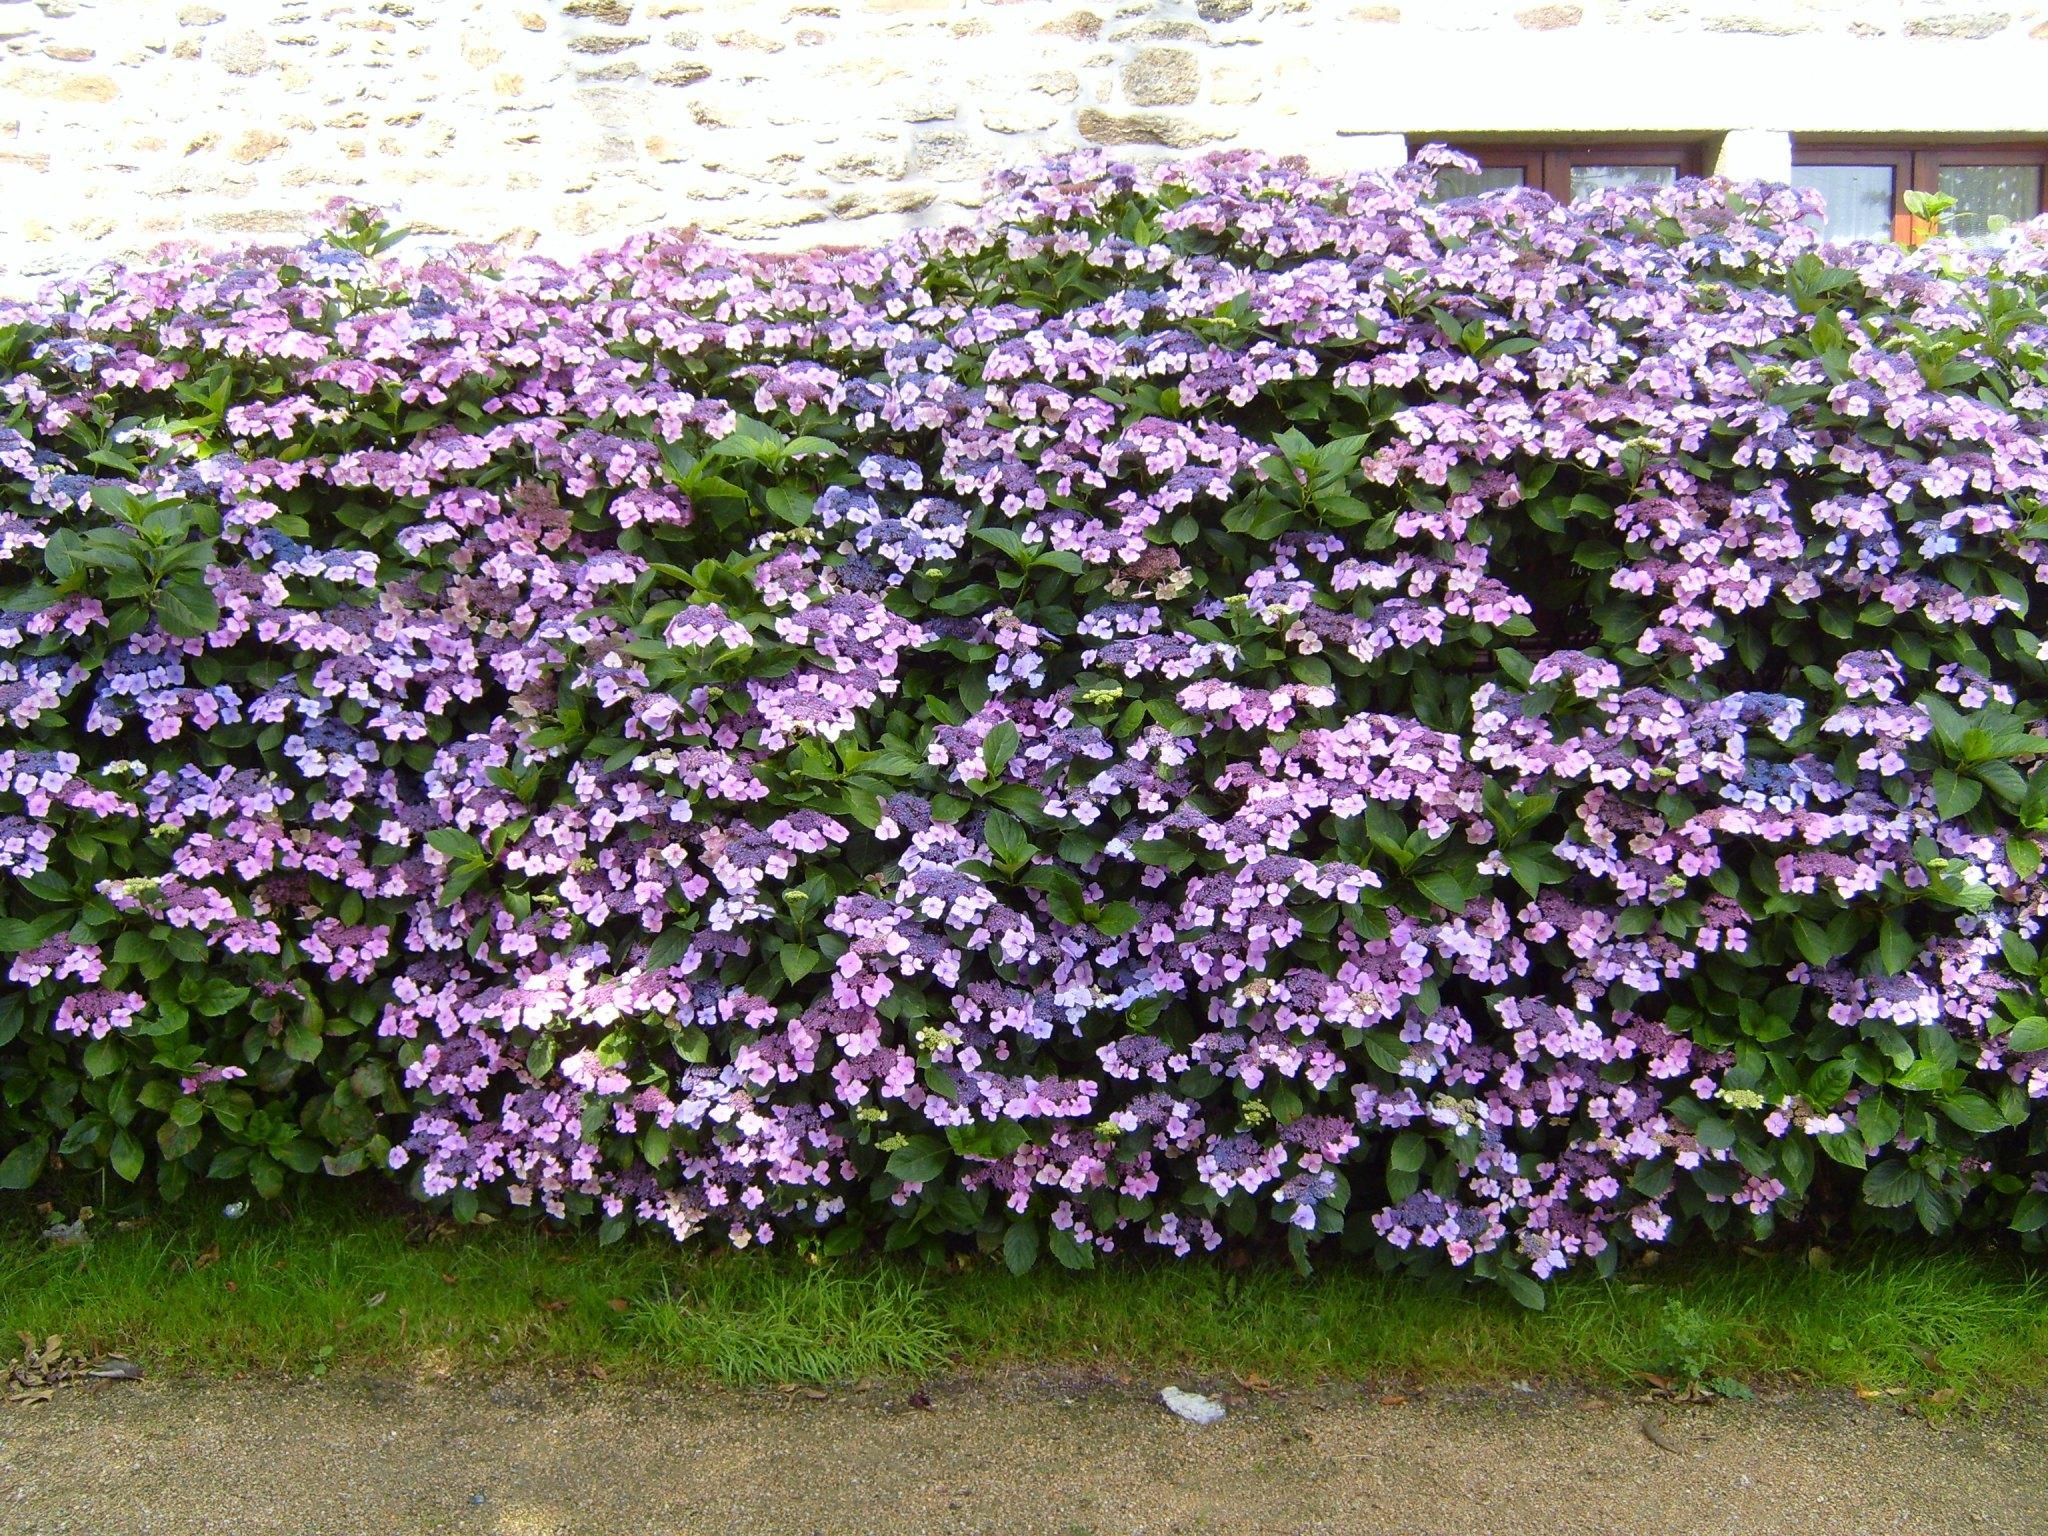 File:Flowered hedge flowers hydrangea.jpg - Wikimedia Commons